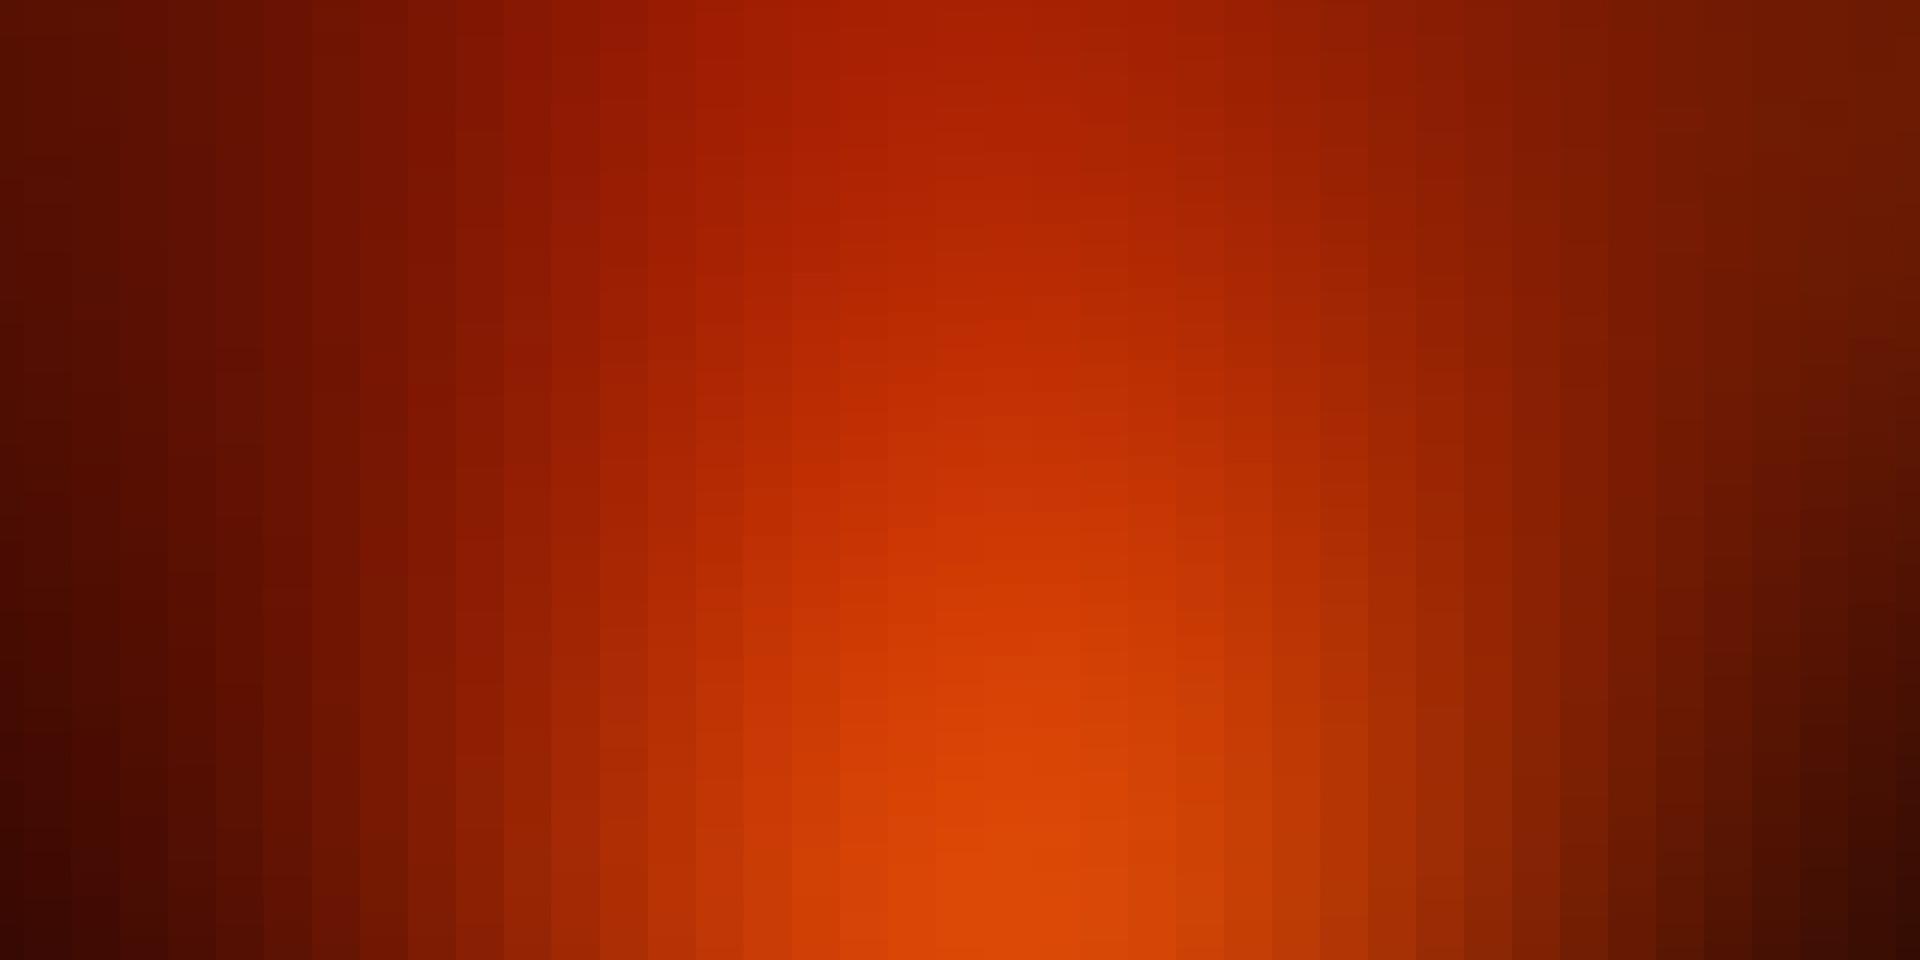 Dark Orange vector backdrop with rectangles.